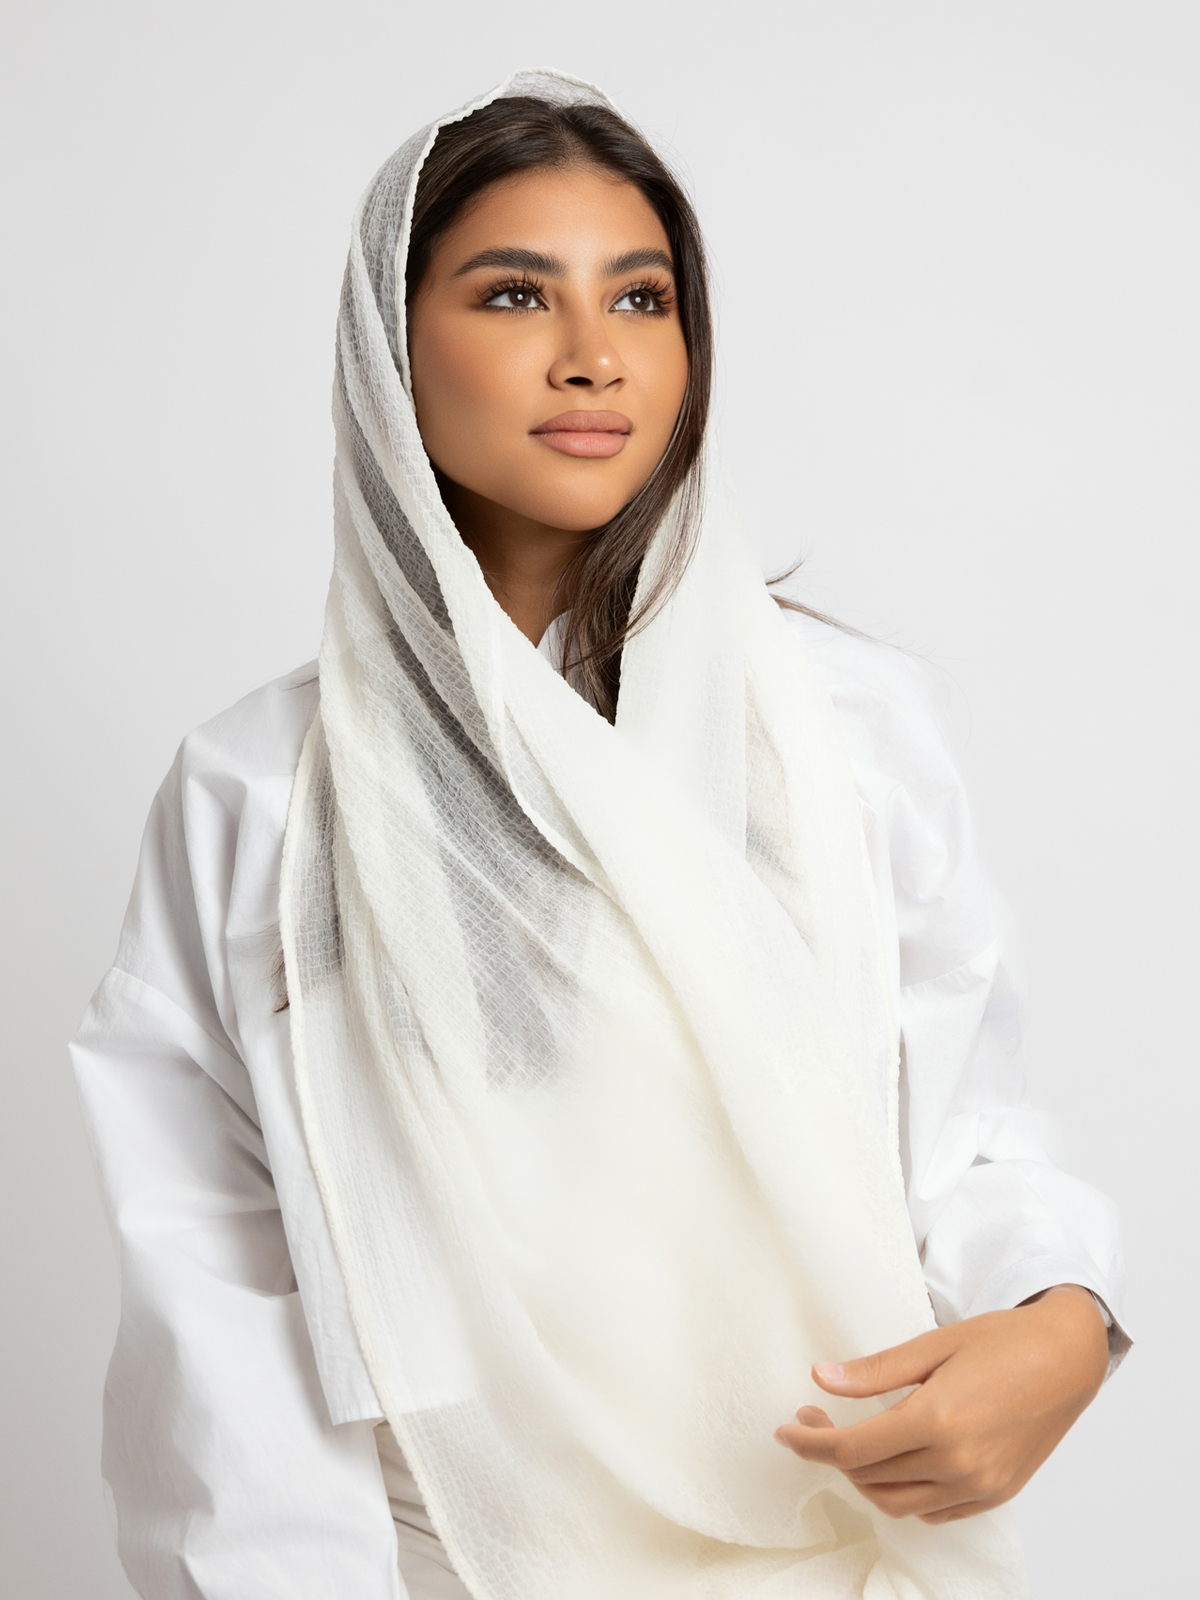 Luxurious chiffon hijab plain tarha 200 cm long off white color high quality material online in ksa by kaafmeem